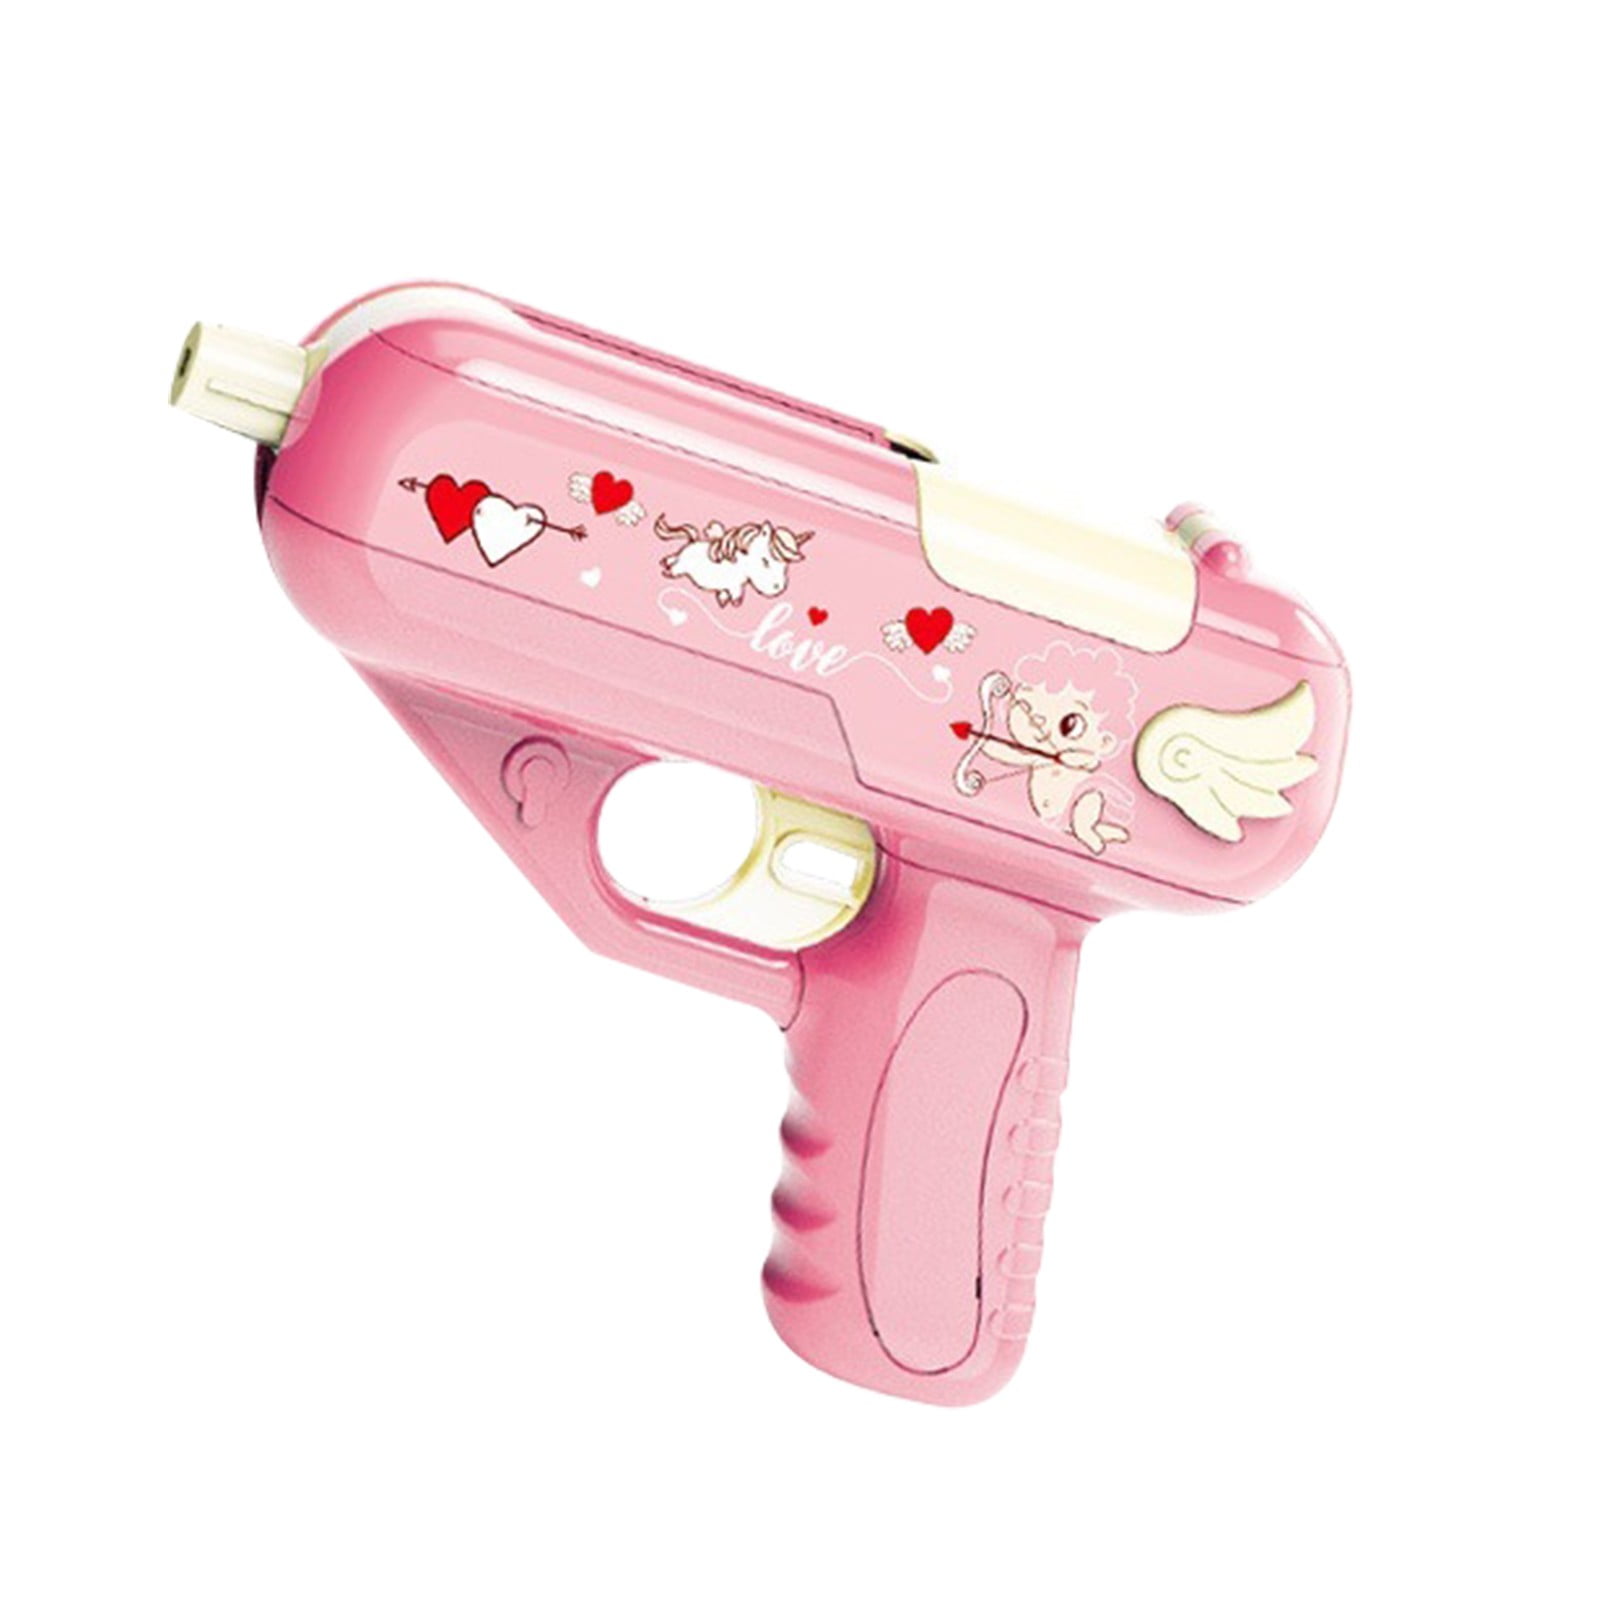 Details about   Creative Novelty Lollipop Gun Candy Gun Sugar Sweet Toys Surprise for Boys Girls 